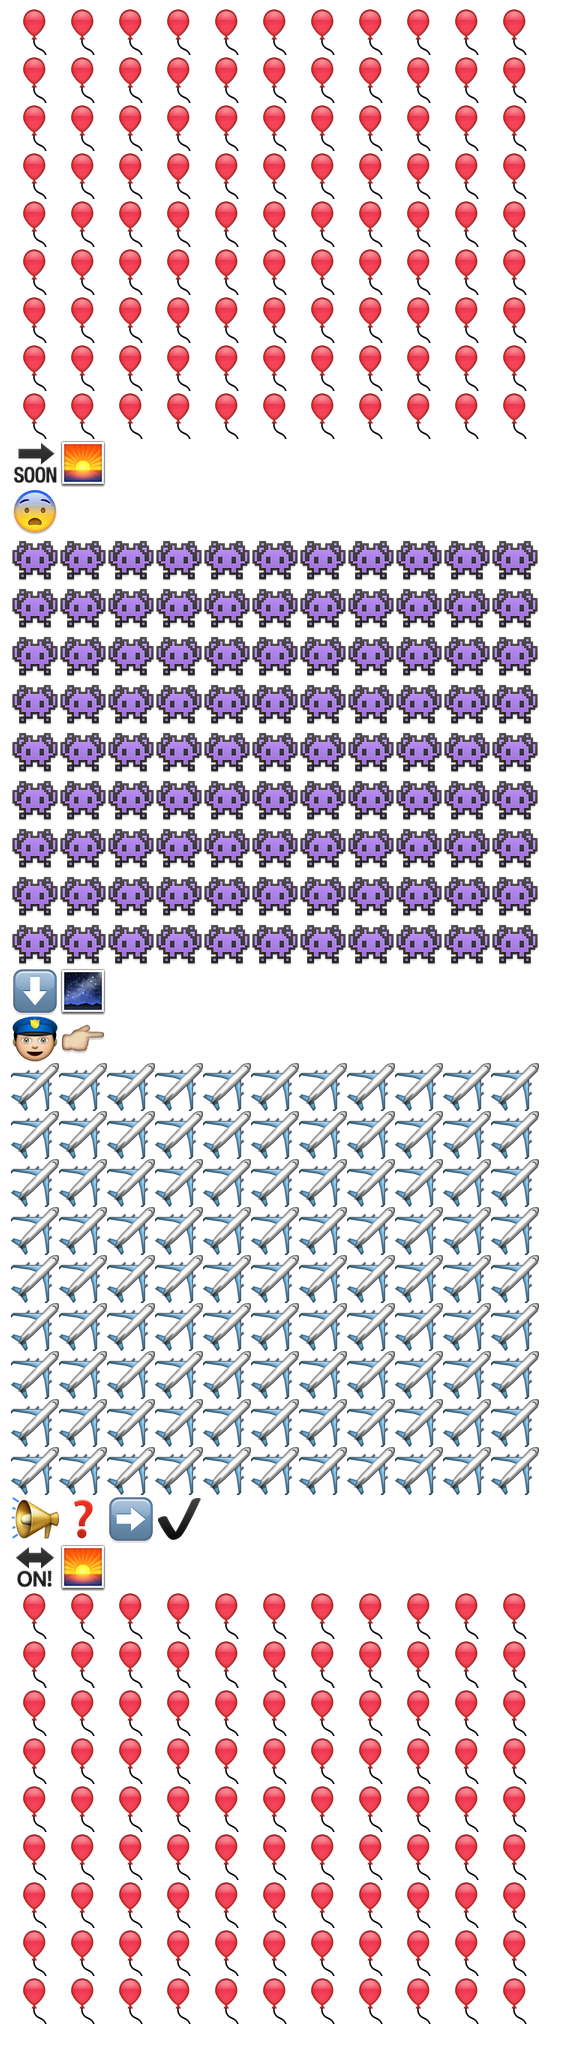 99 Luftballons in Emoji